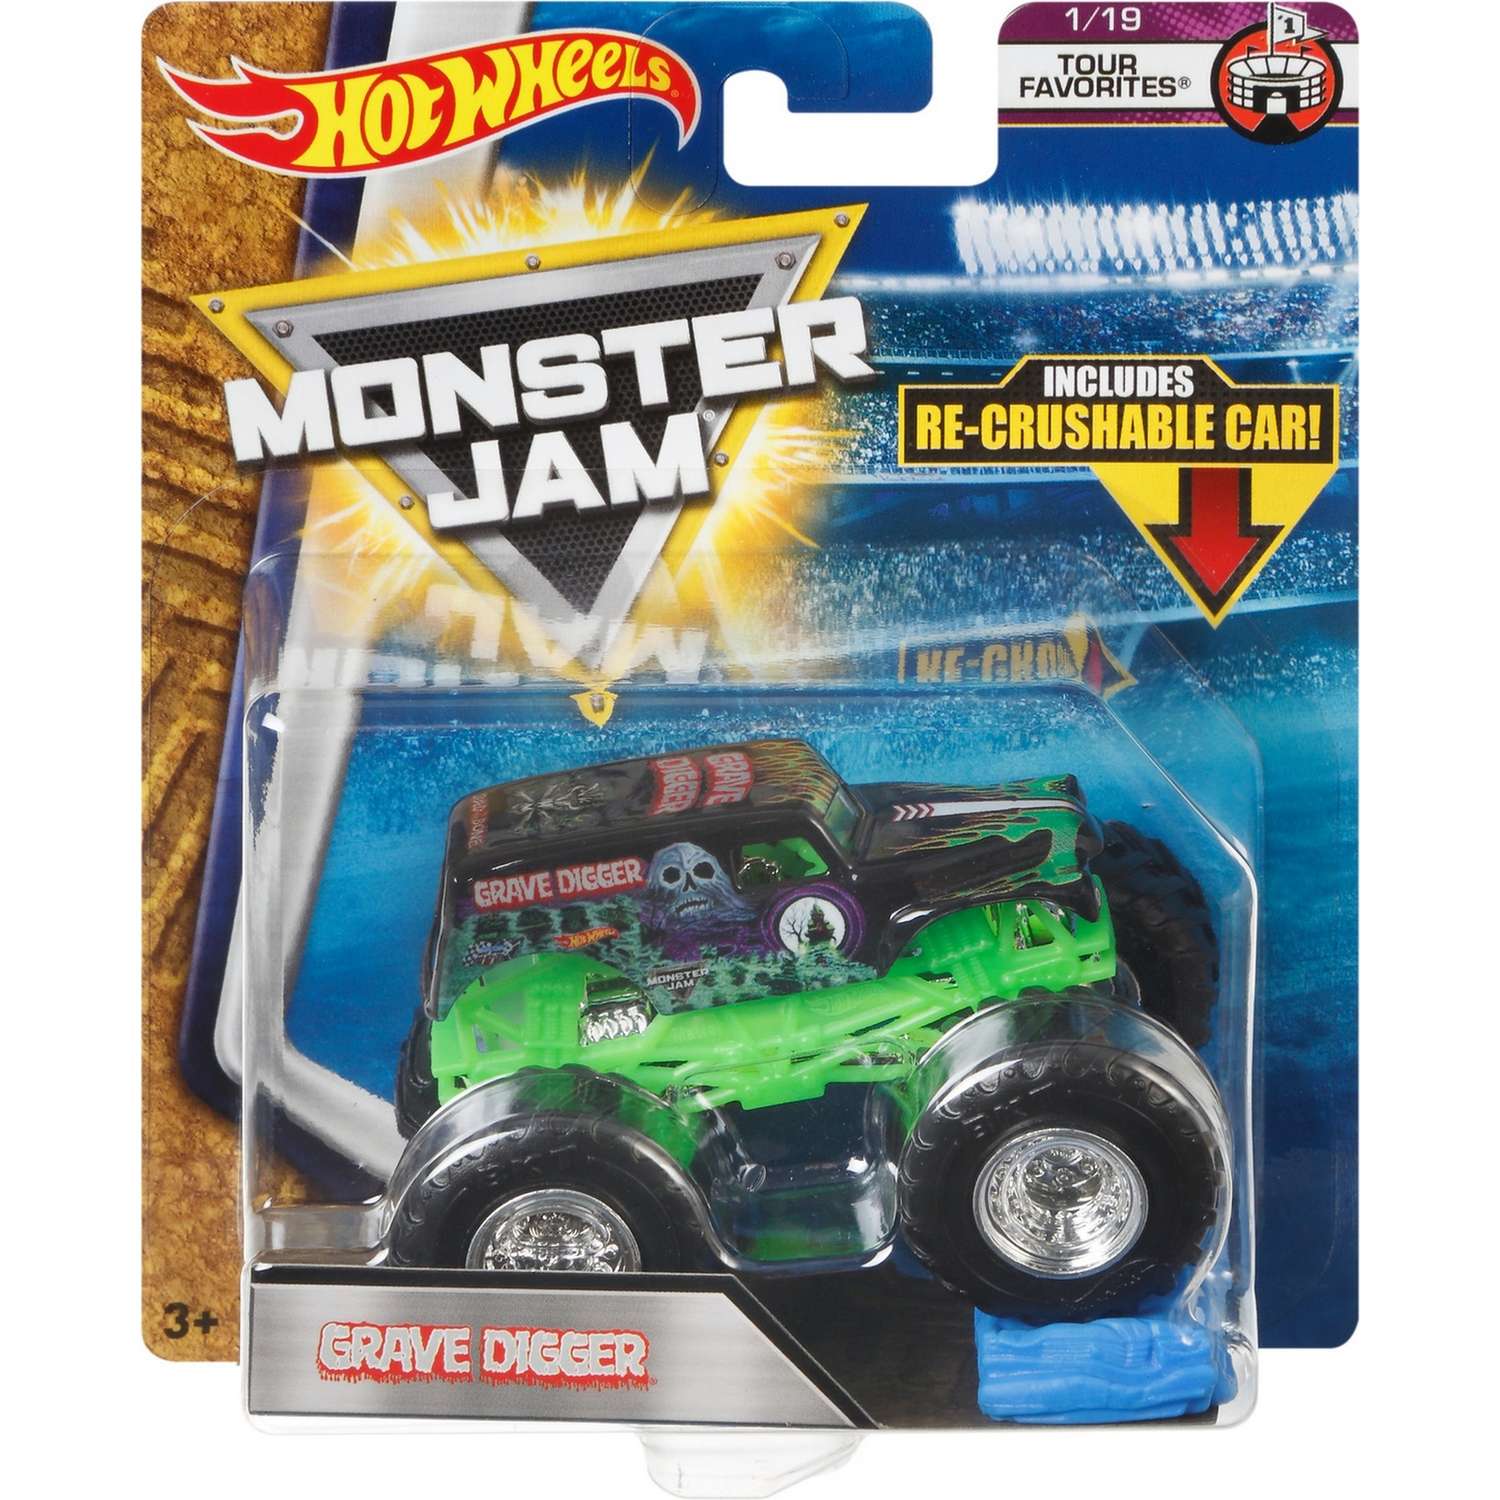 Машина Hot Wheels Monster Jam 1:64 Tour Favorites Грейв Диггер FLX23 21572 - фото 2